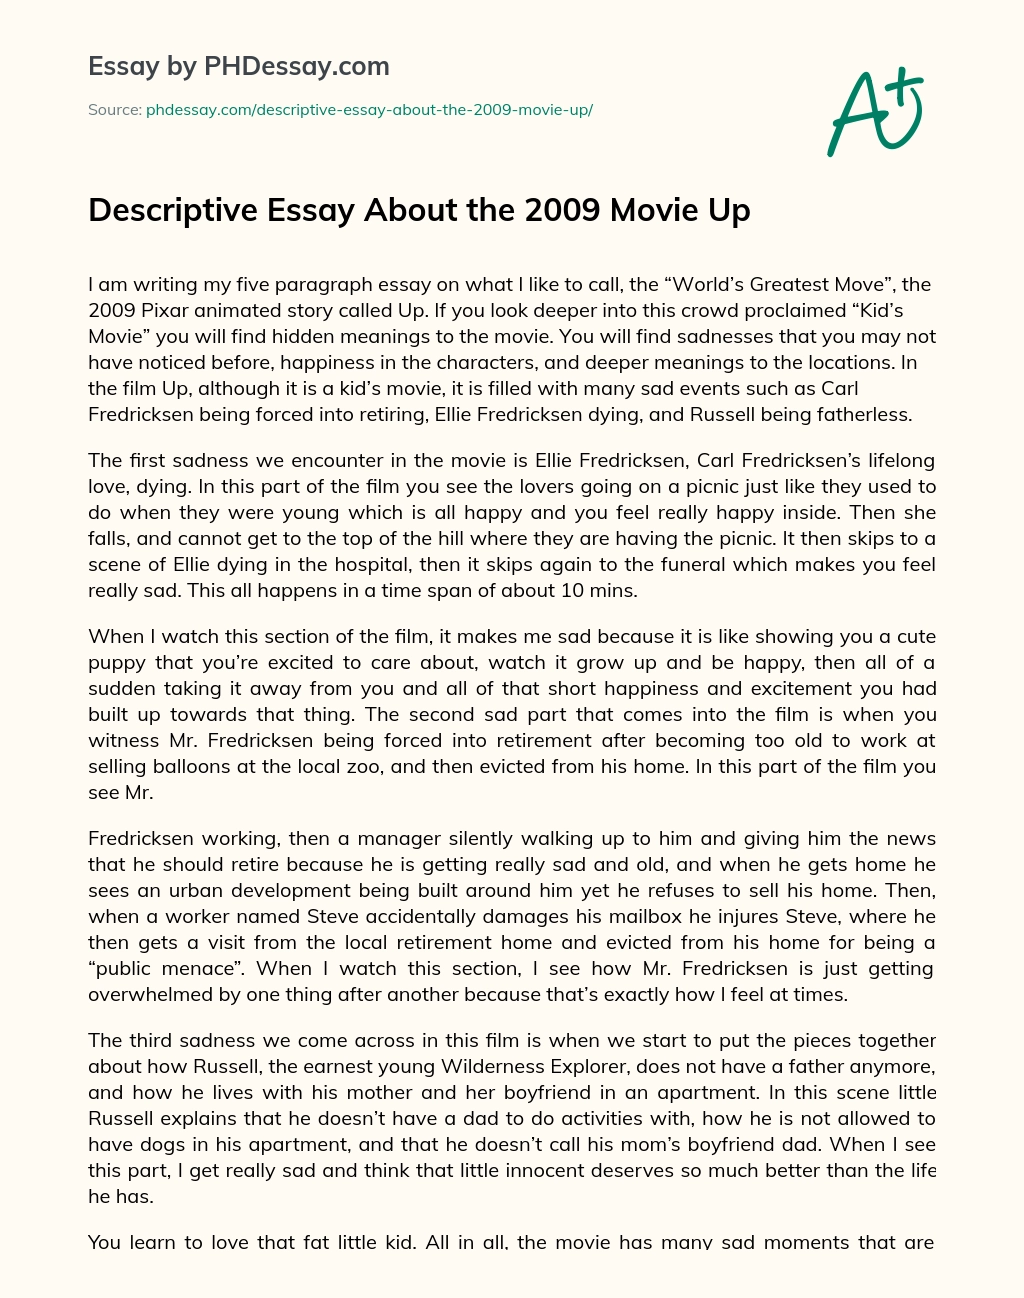 Descriptive Essay About the 2009 Movie Up essay